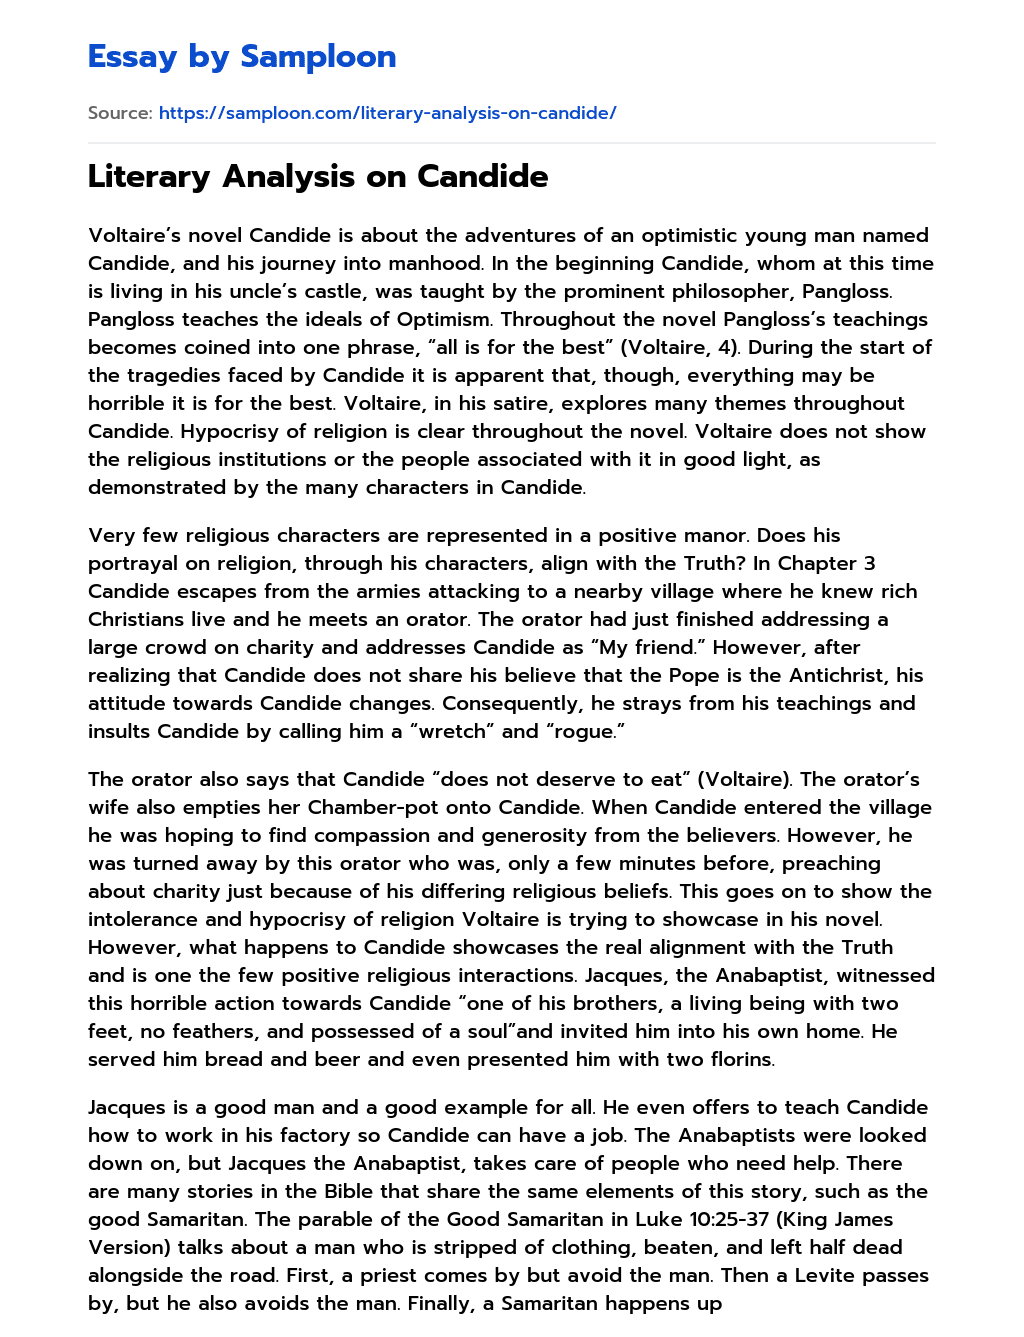 candide analysis essay